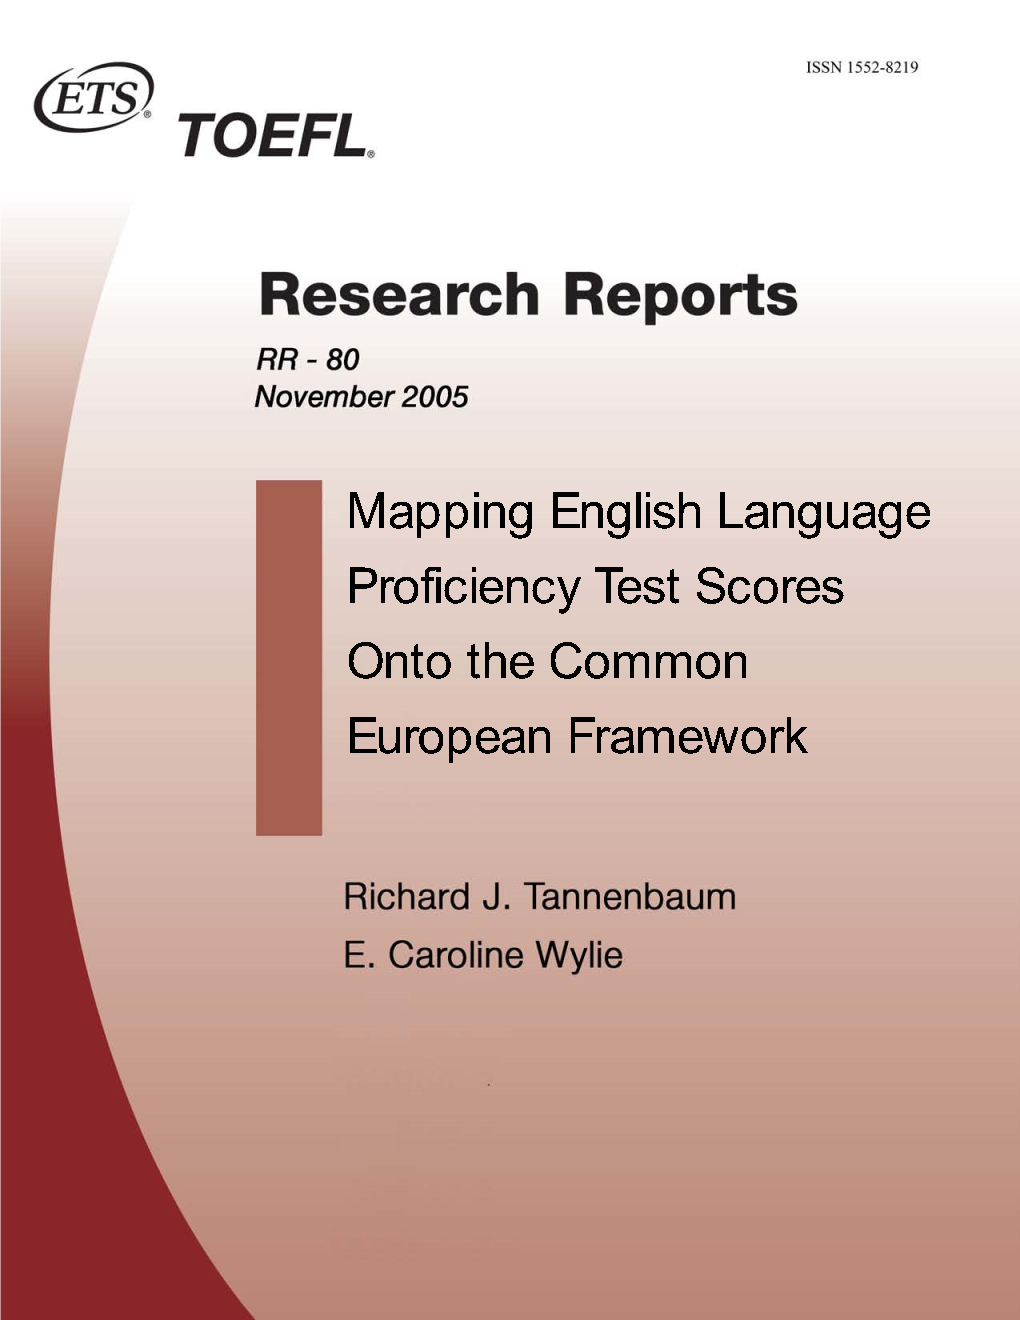 Mapping English Language Proficiency Test Scores